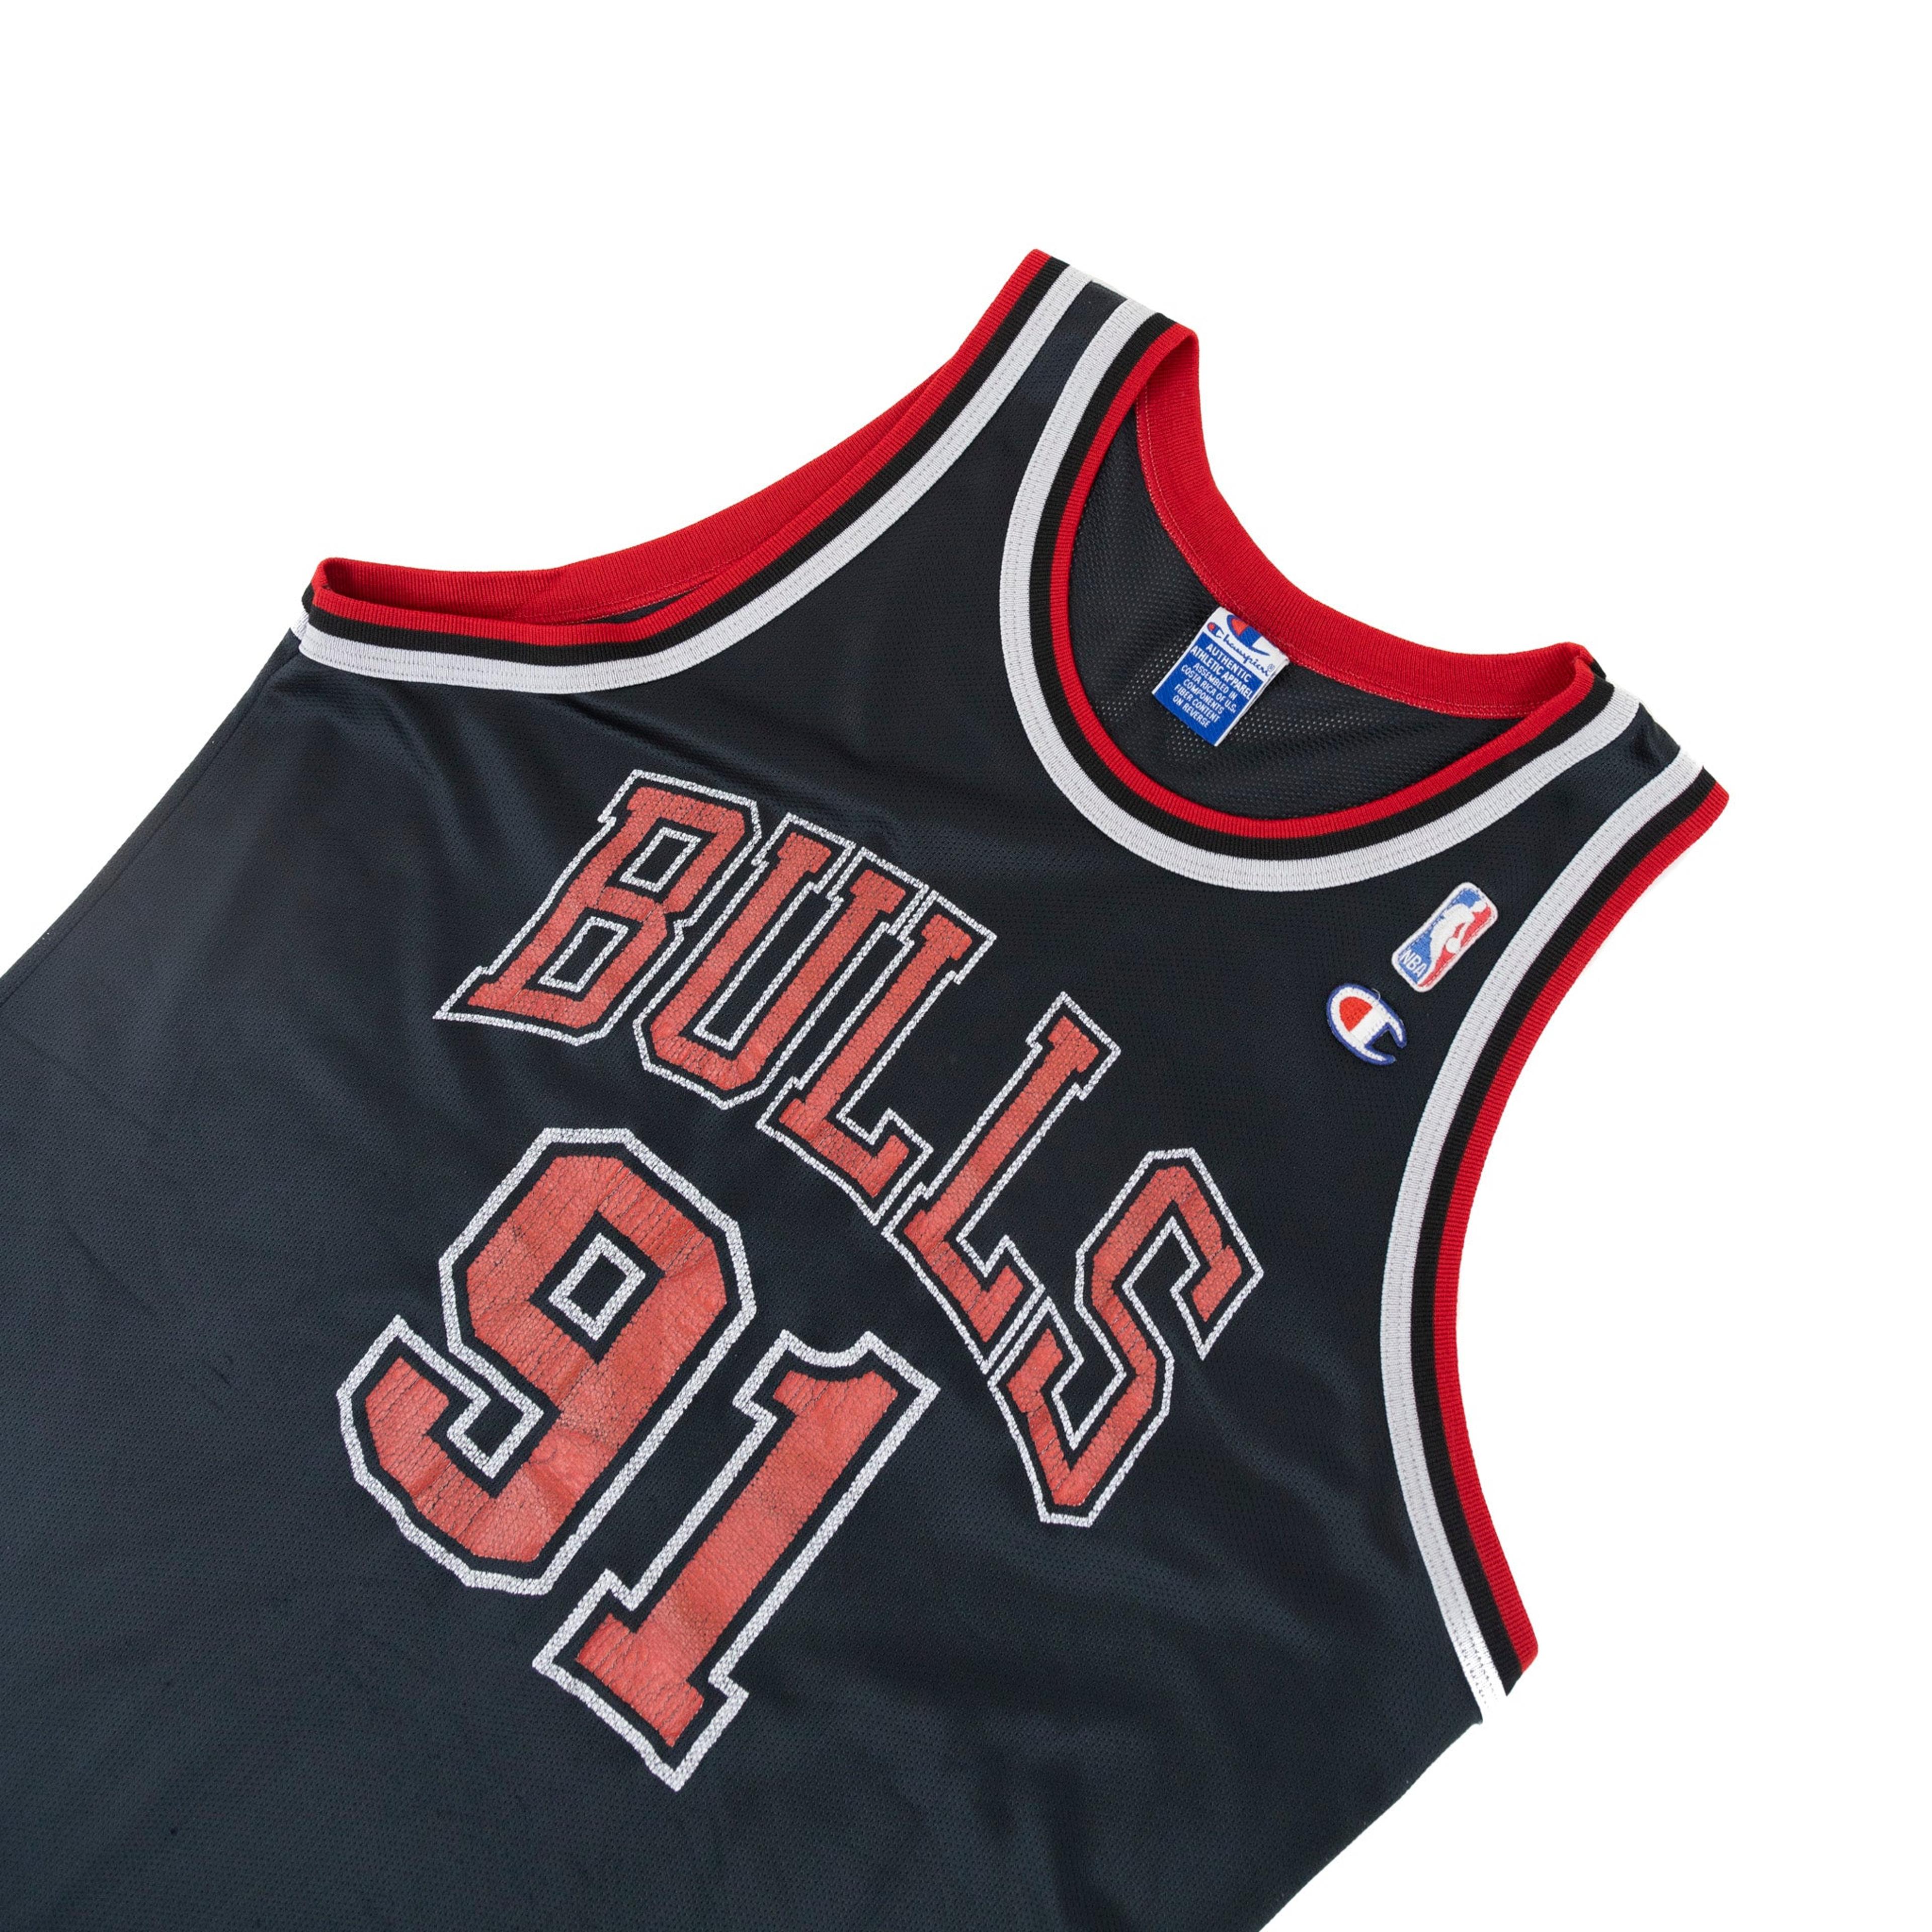 Alternate View 1 of Chicago Bulls x Champion NBA Rodman Vest